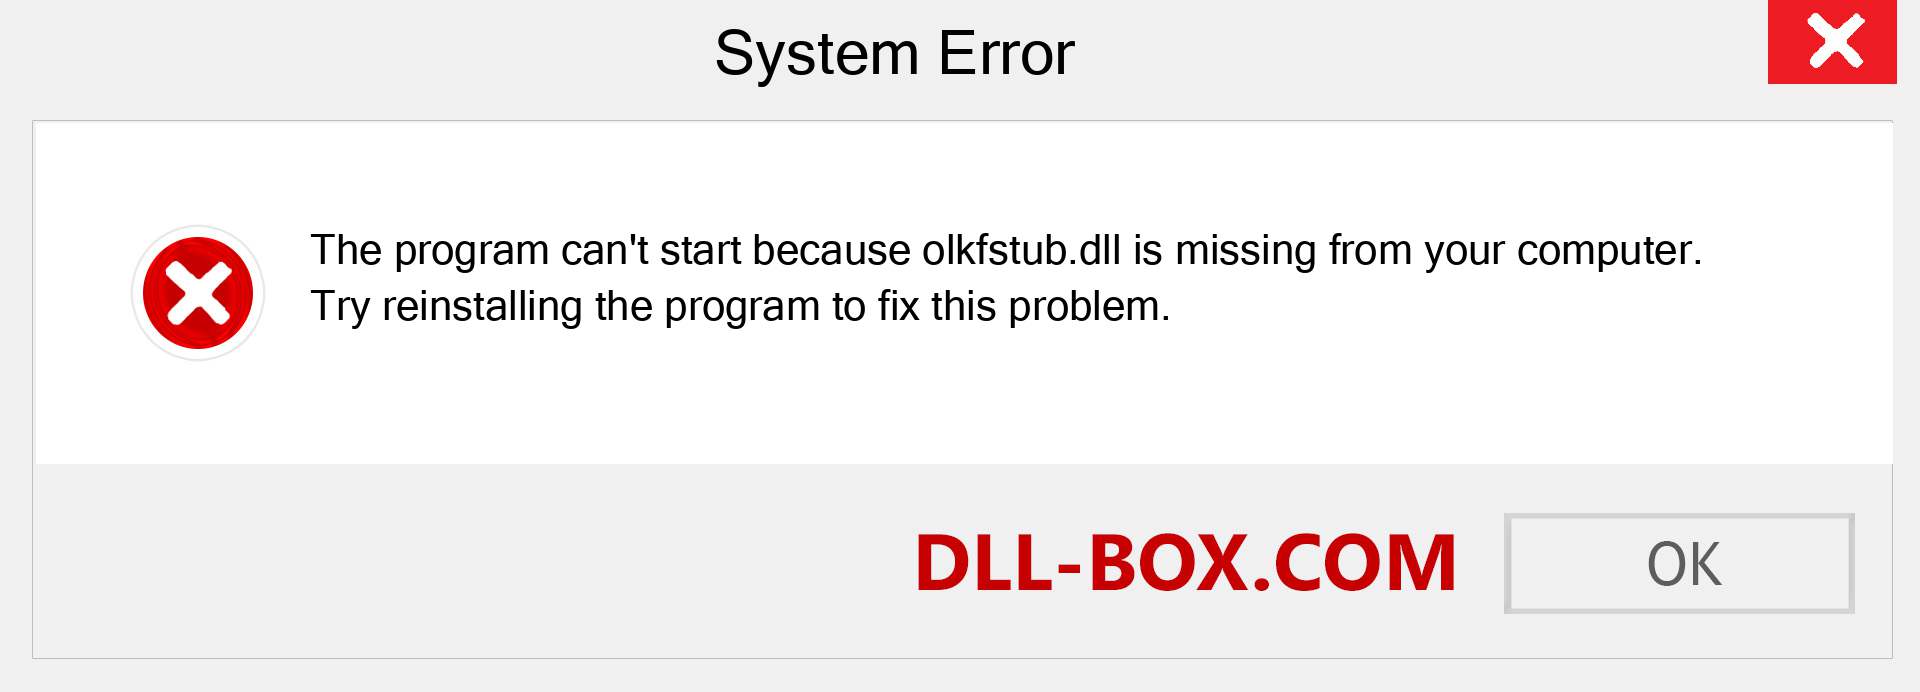  olkfstub.dll file is missing?. Download for Windows 7, 8, 10 - Fix  olkfstub dll Missing Error on Windows, photos, images